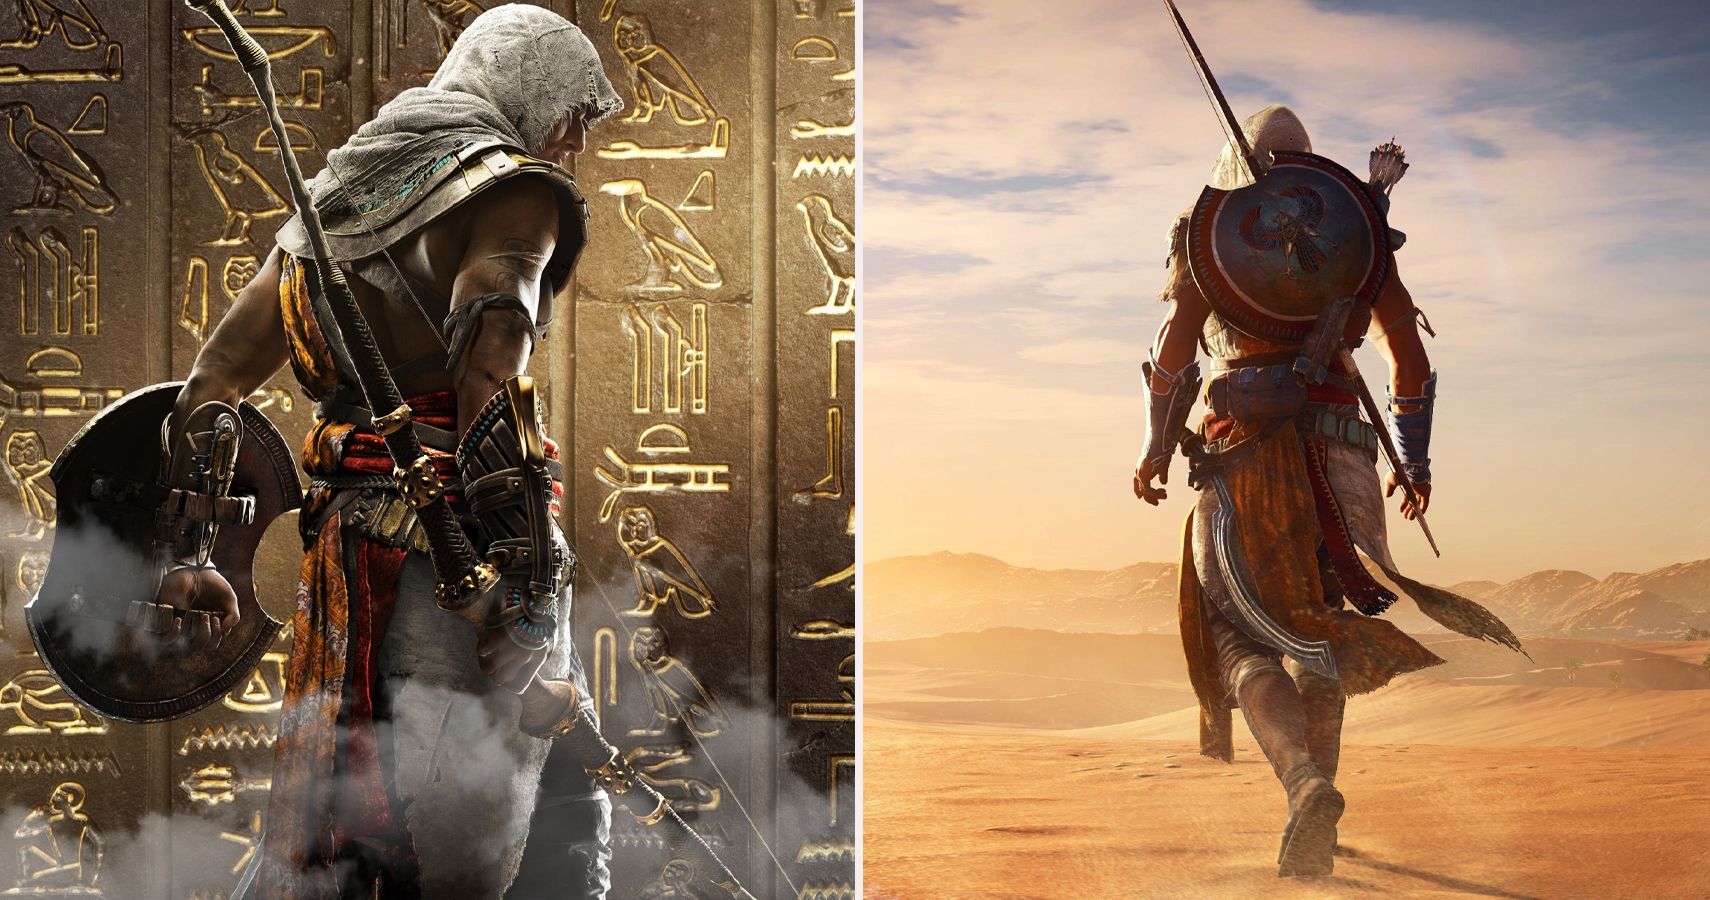 Assassin's Creed Origins Trophies •